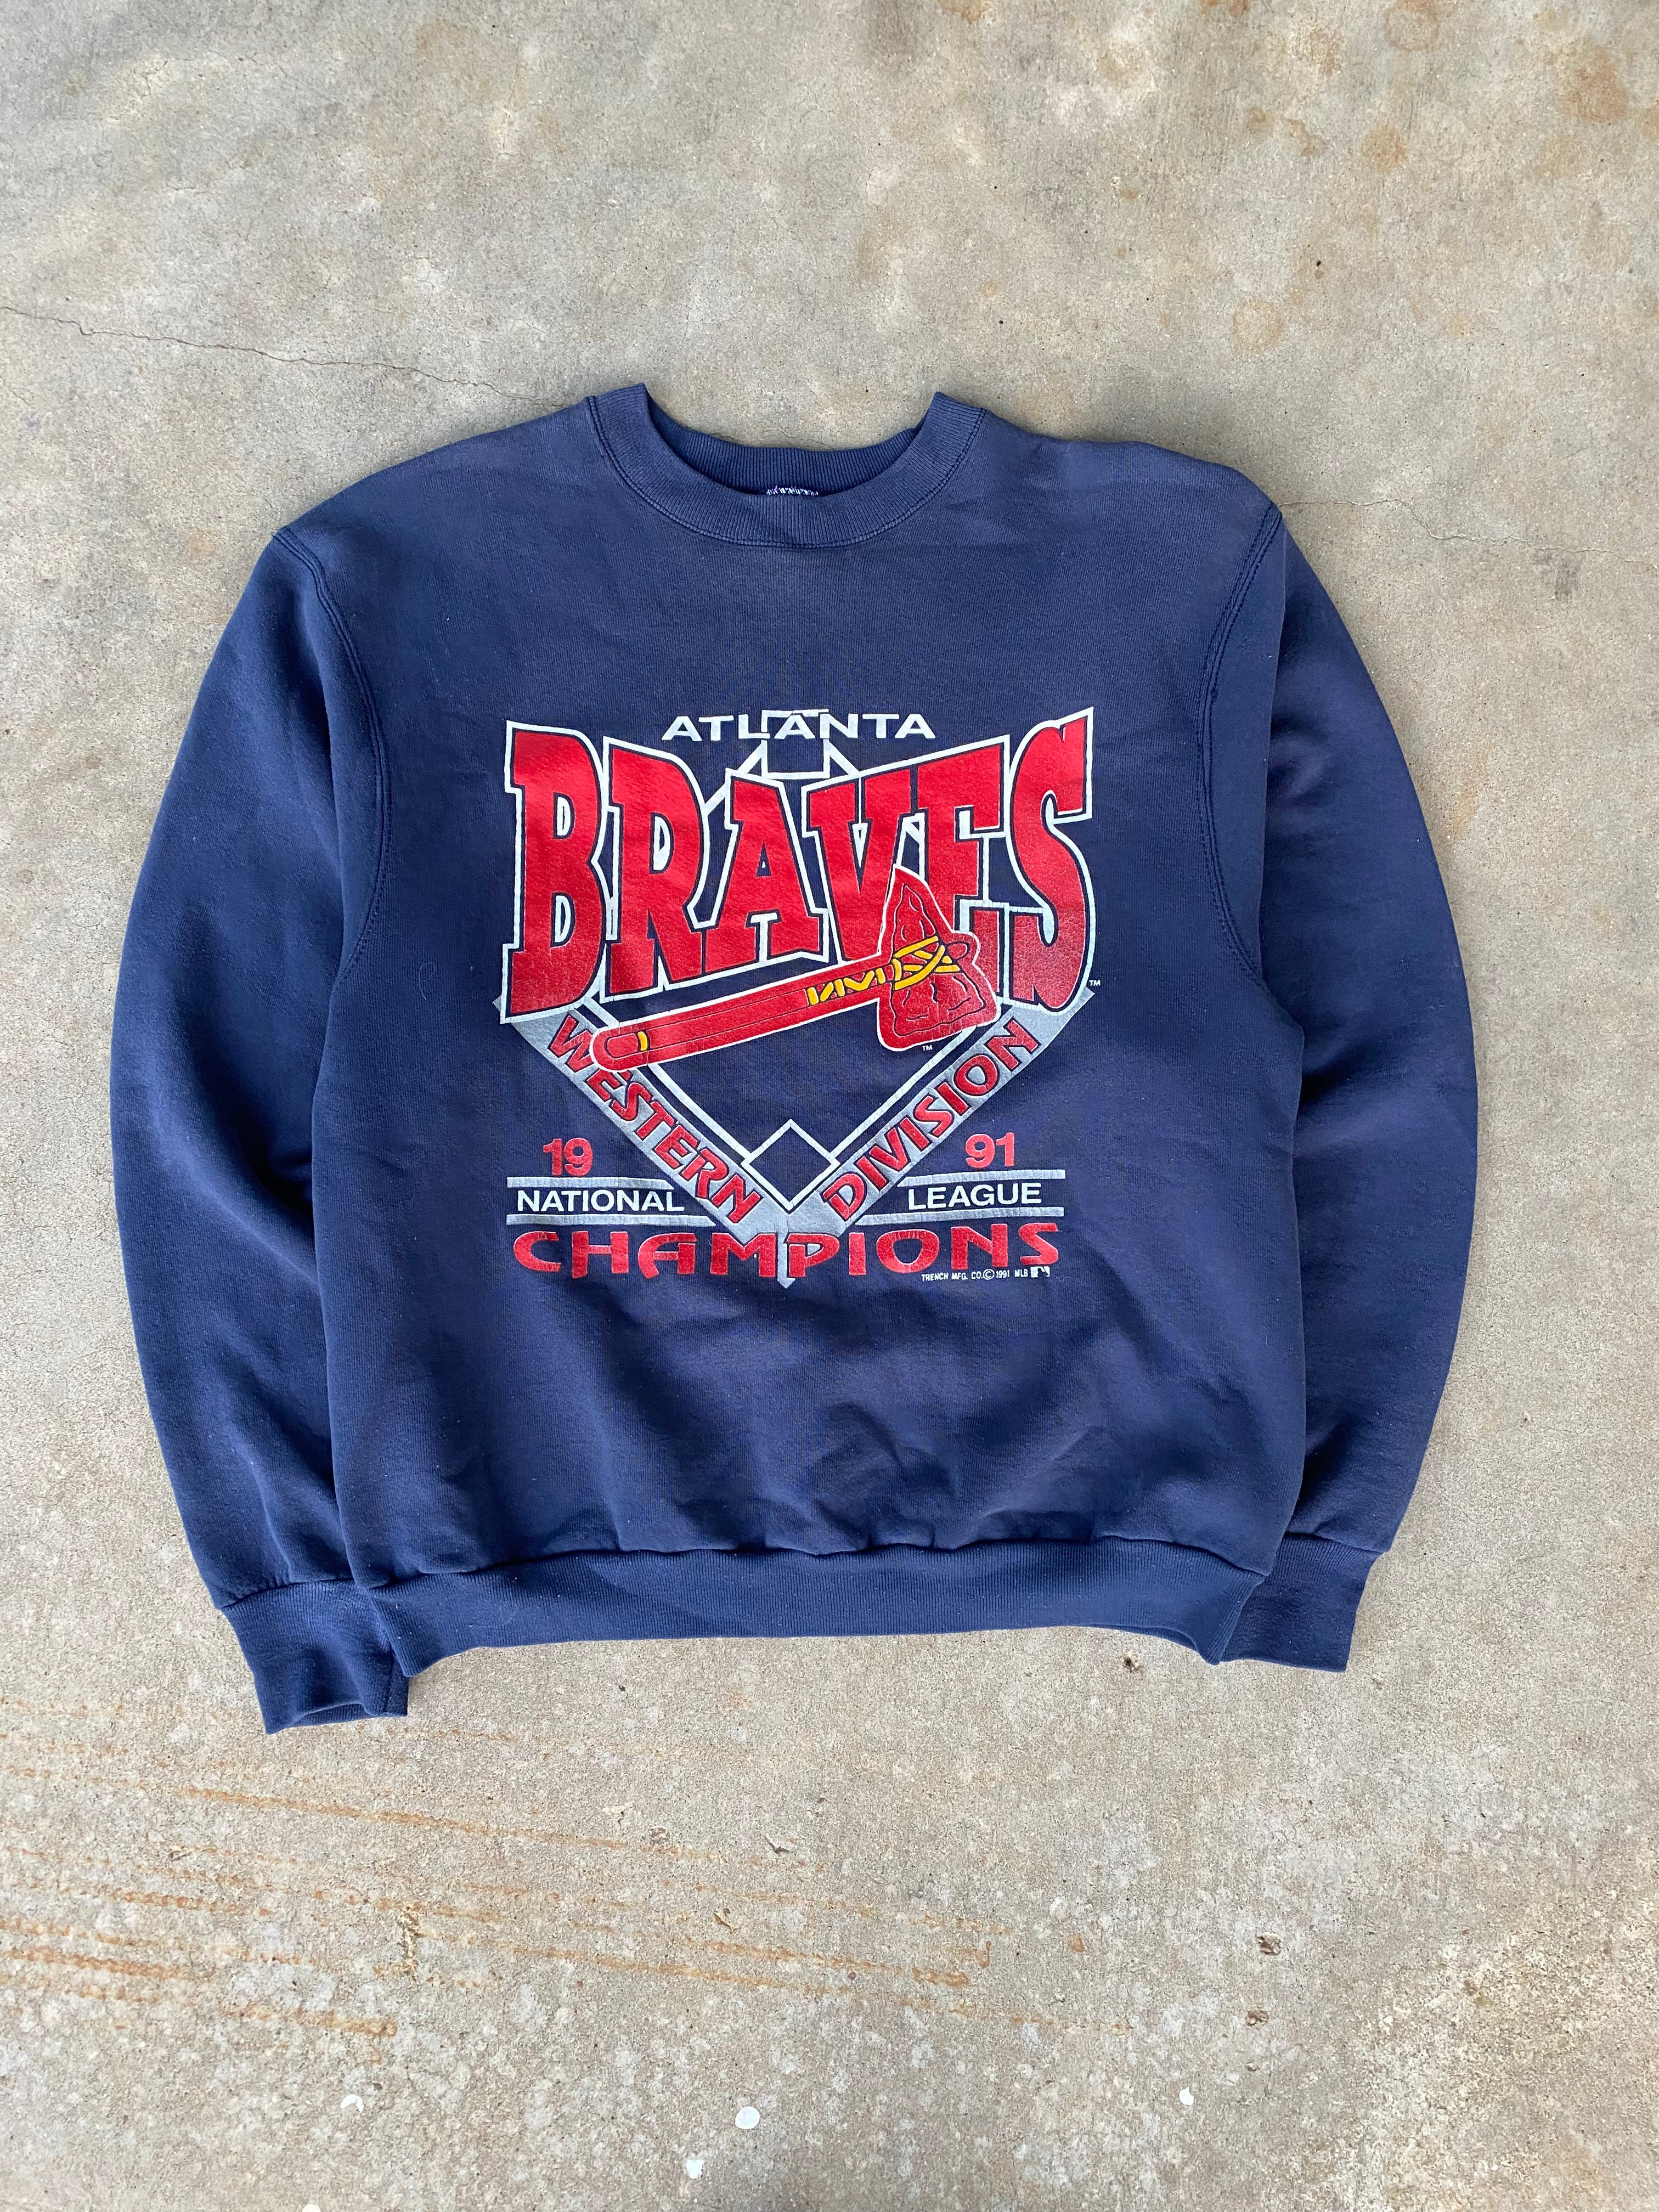 1991 Atlanta Braves National League Champions Crewneck (M)